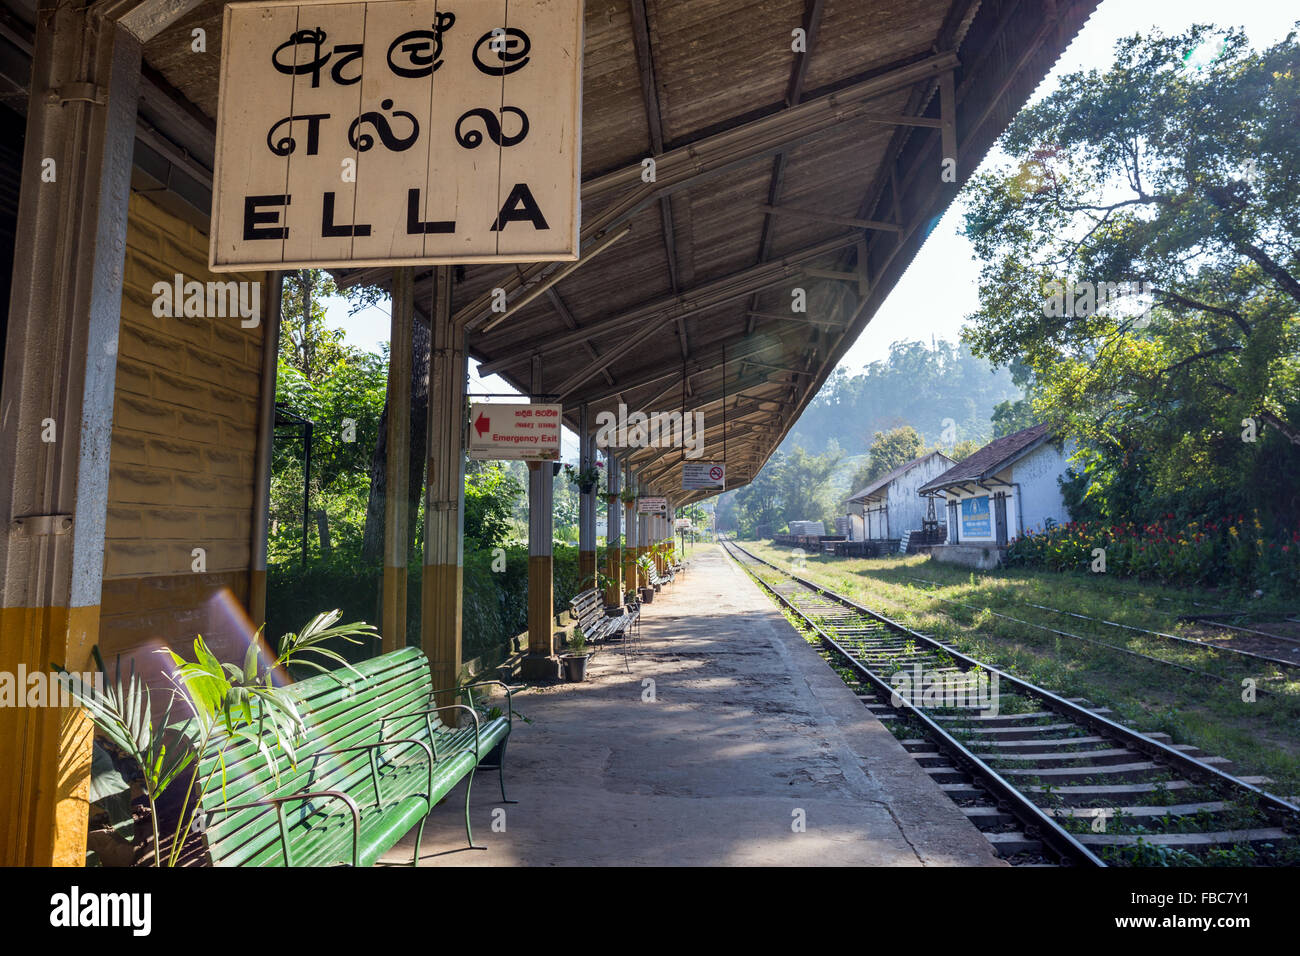 Ella train station platform, Southern Highlands,  Sri Lanka Stock Photo